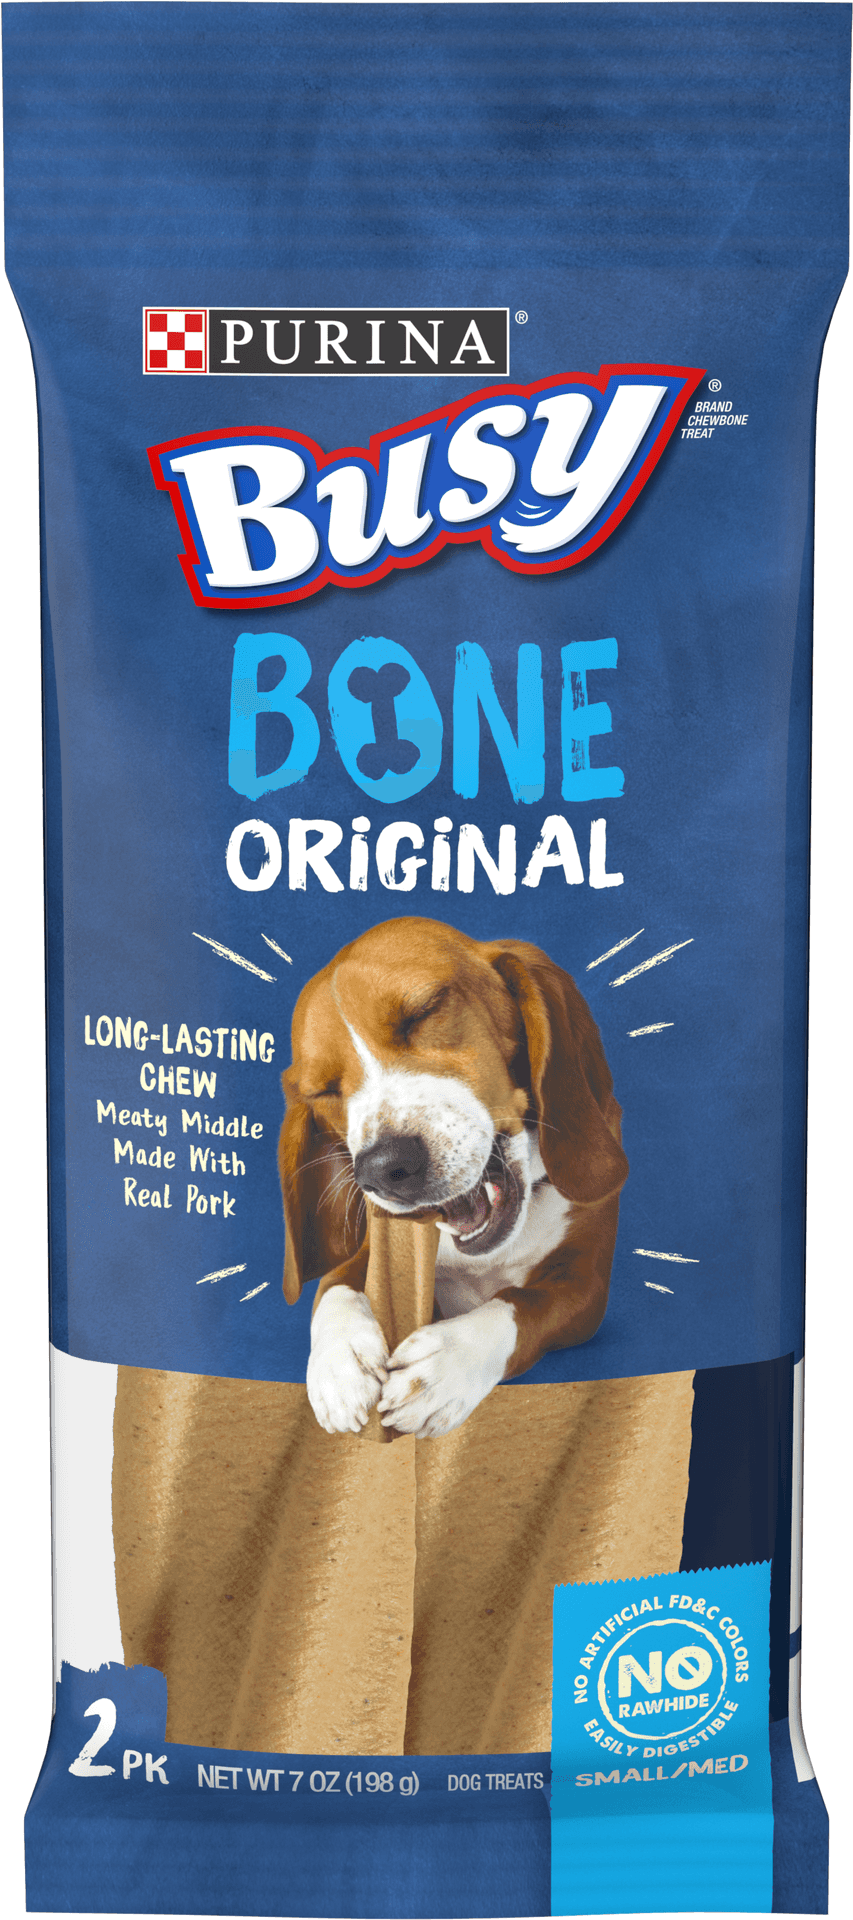 Purina Busy Bone Original Dog Treats Packaging PNG image